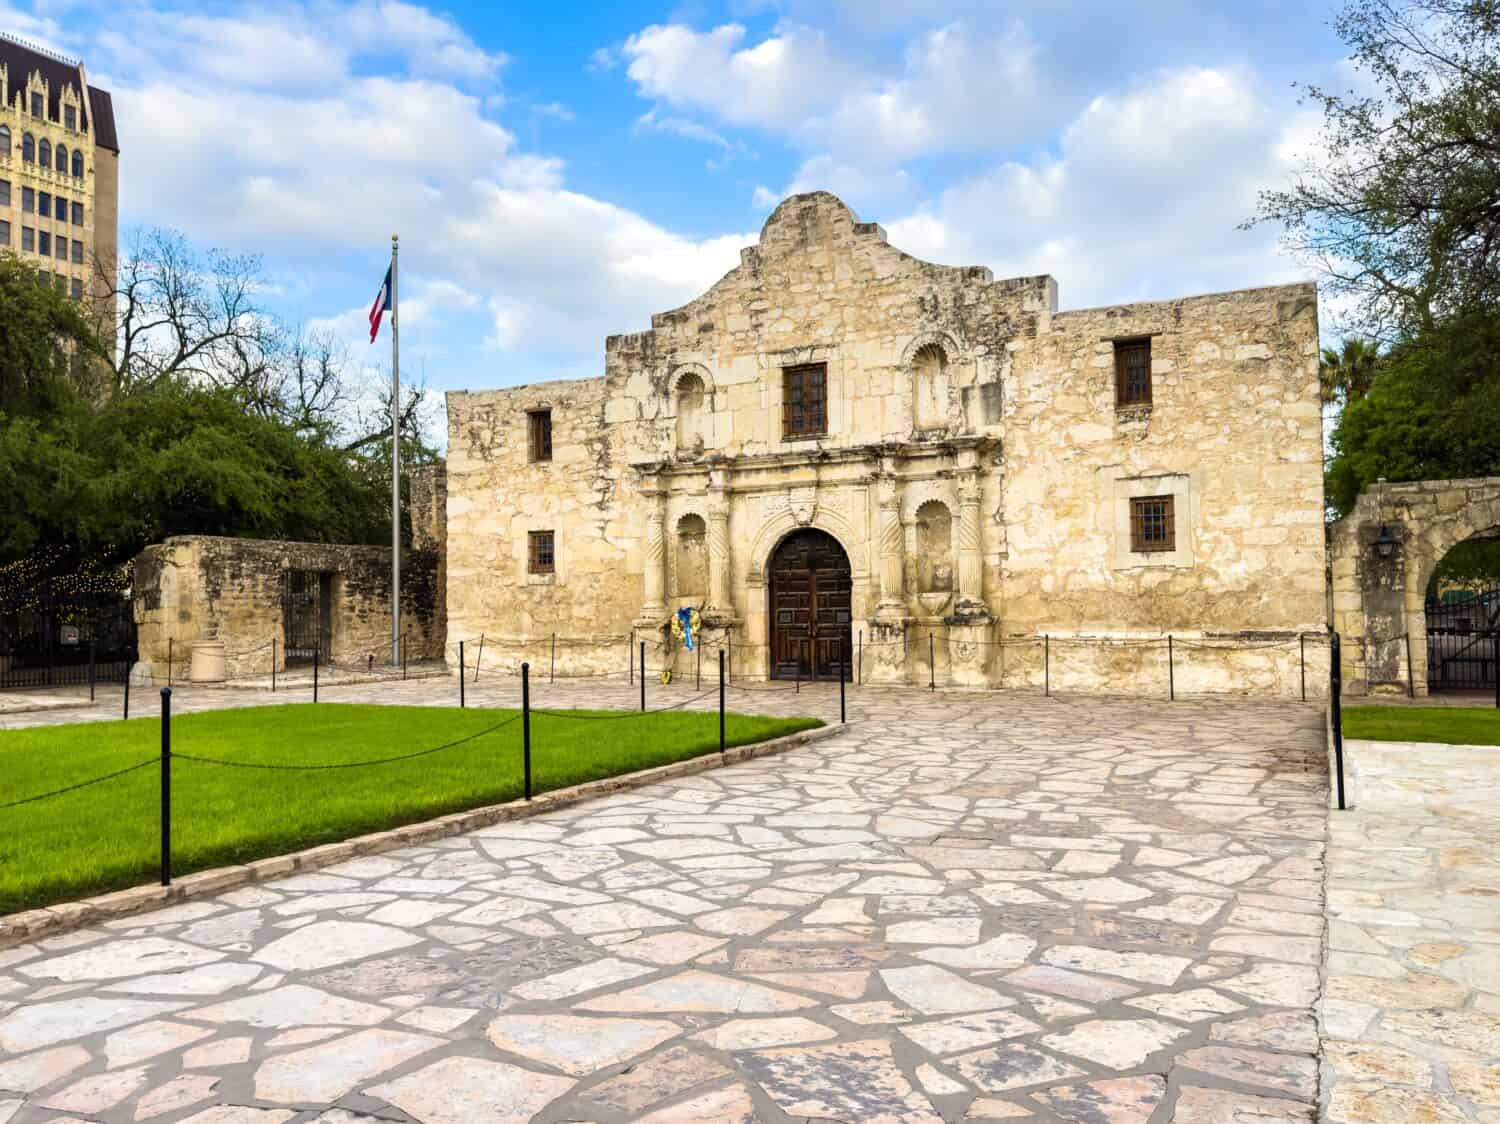 Side view of the Alamo in San Antonio, Texas.